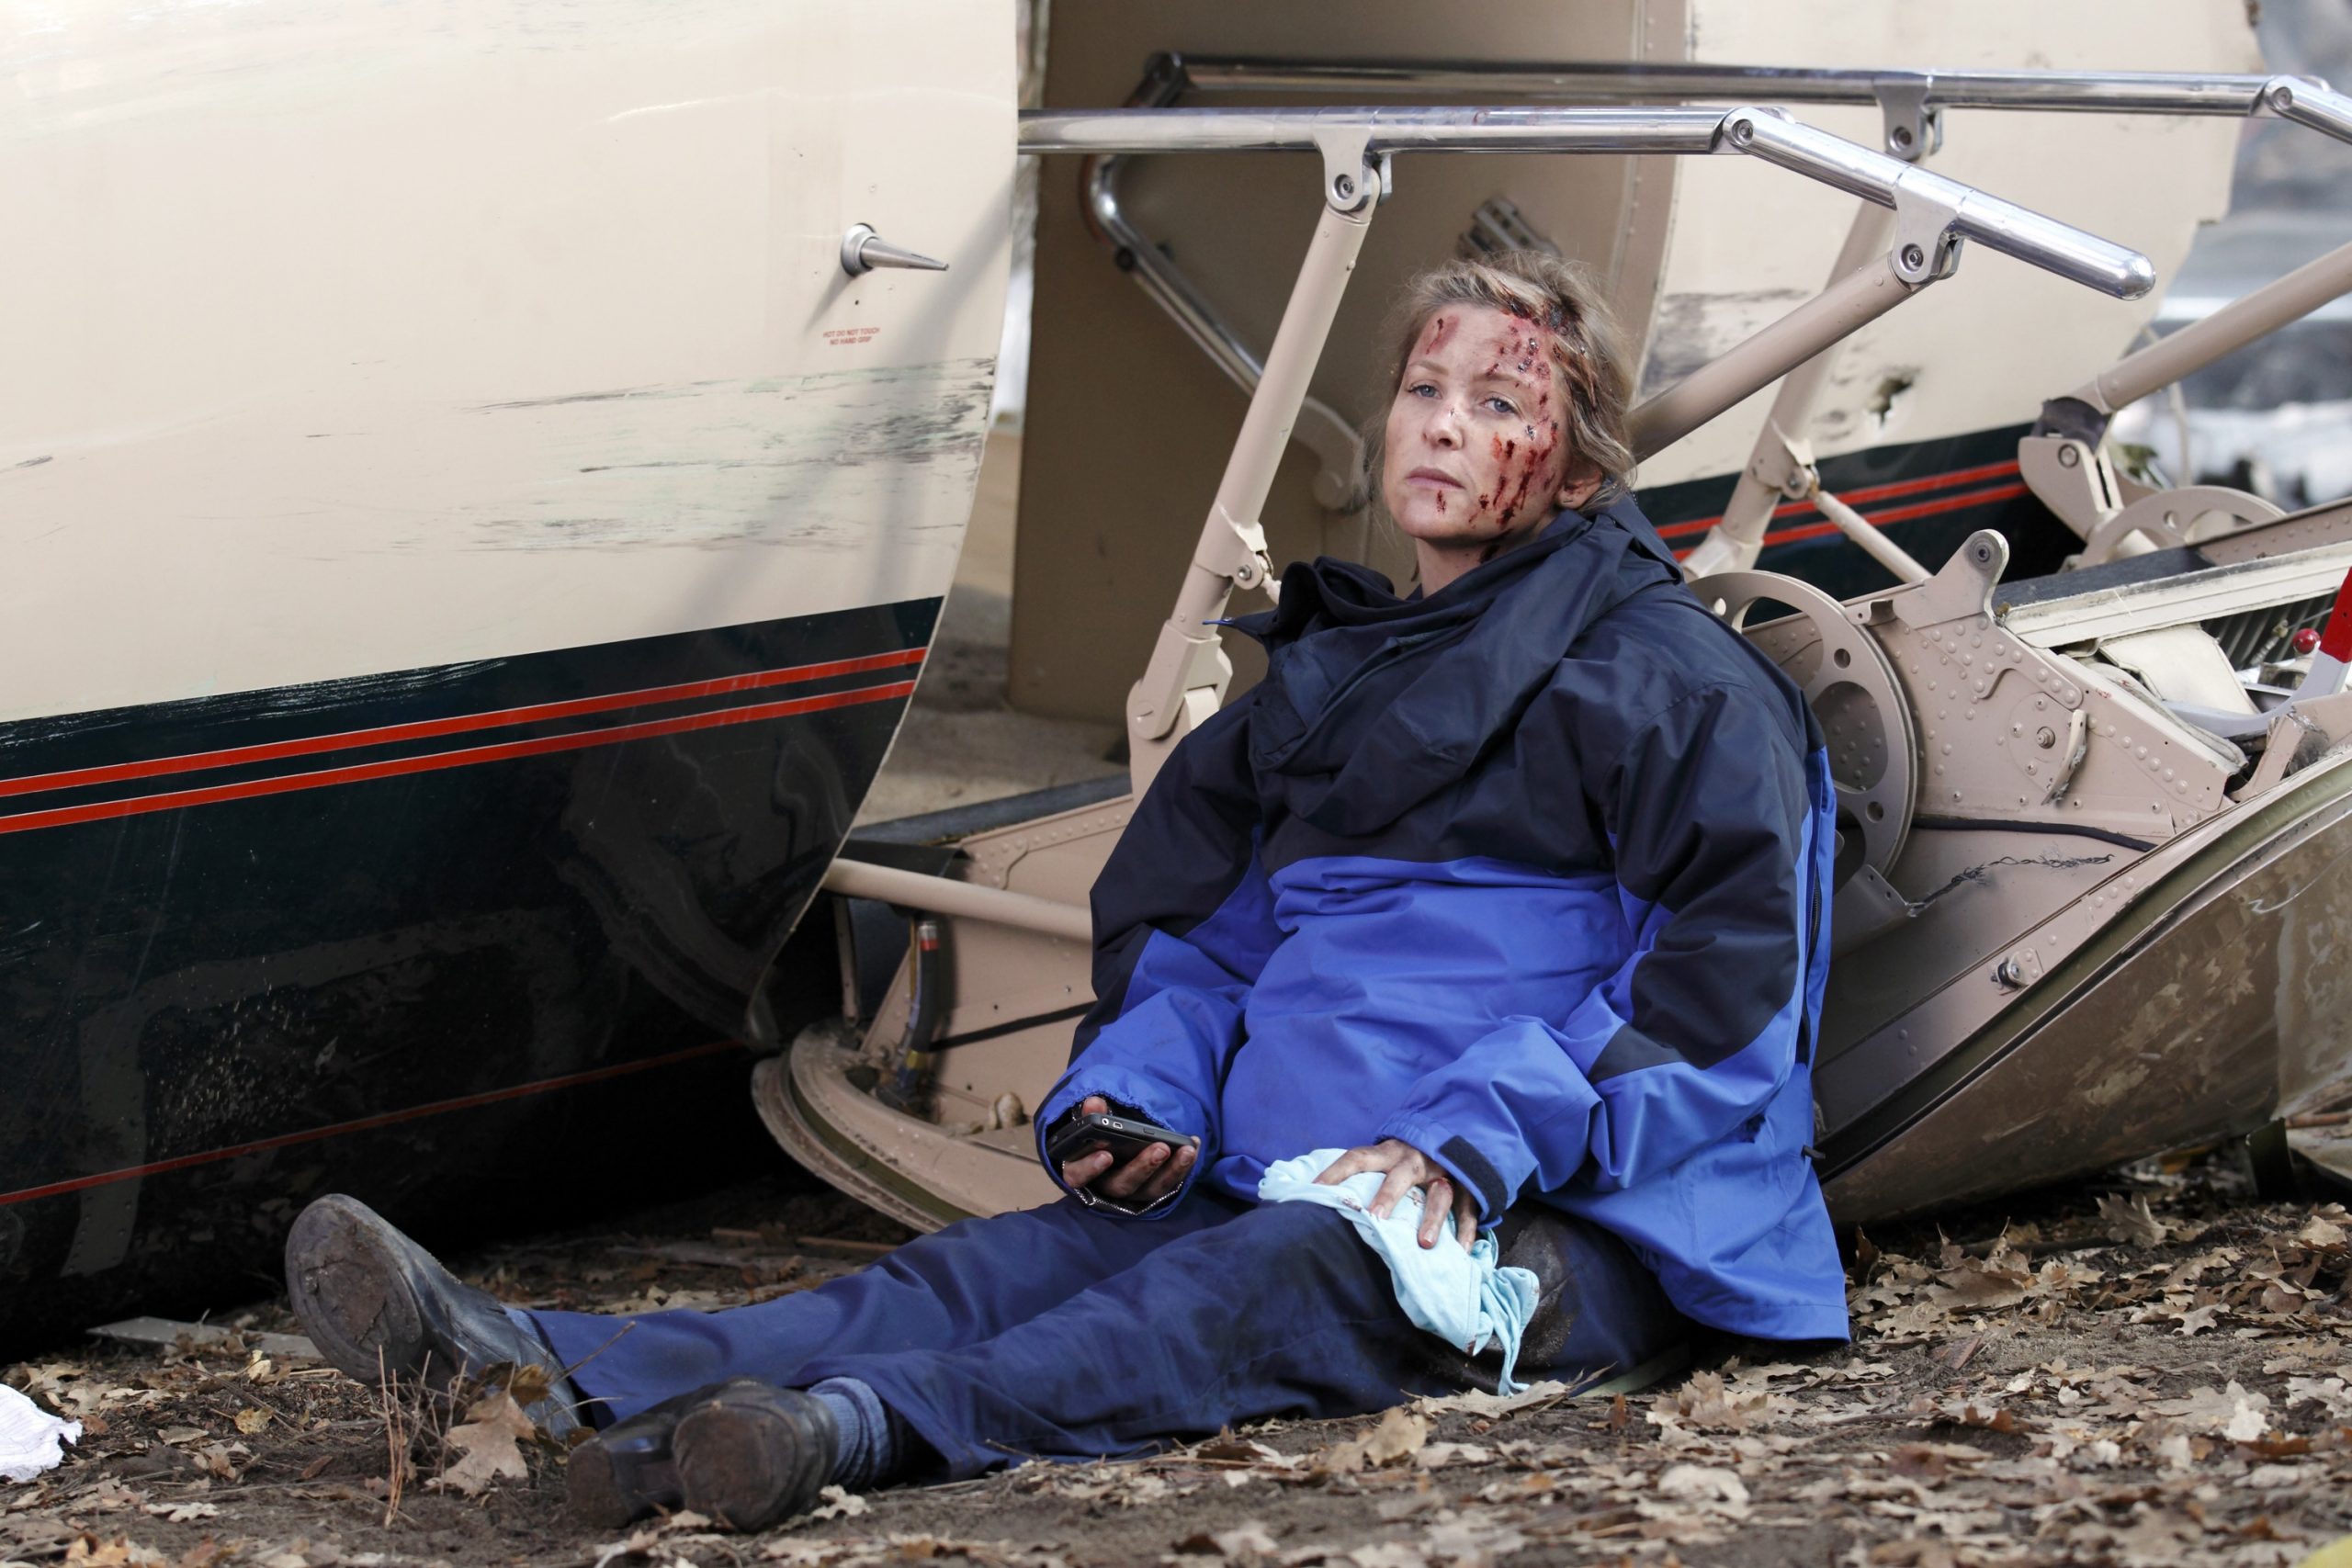 What happened to Arizona Robbins after the plane crash?